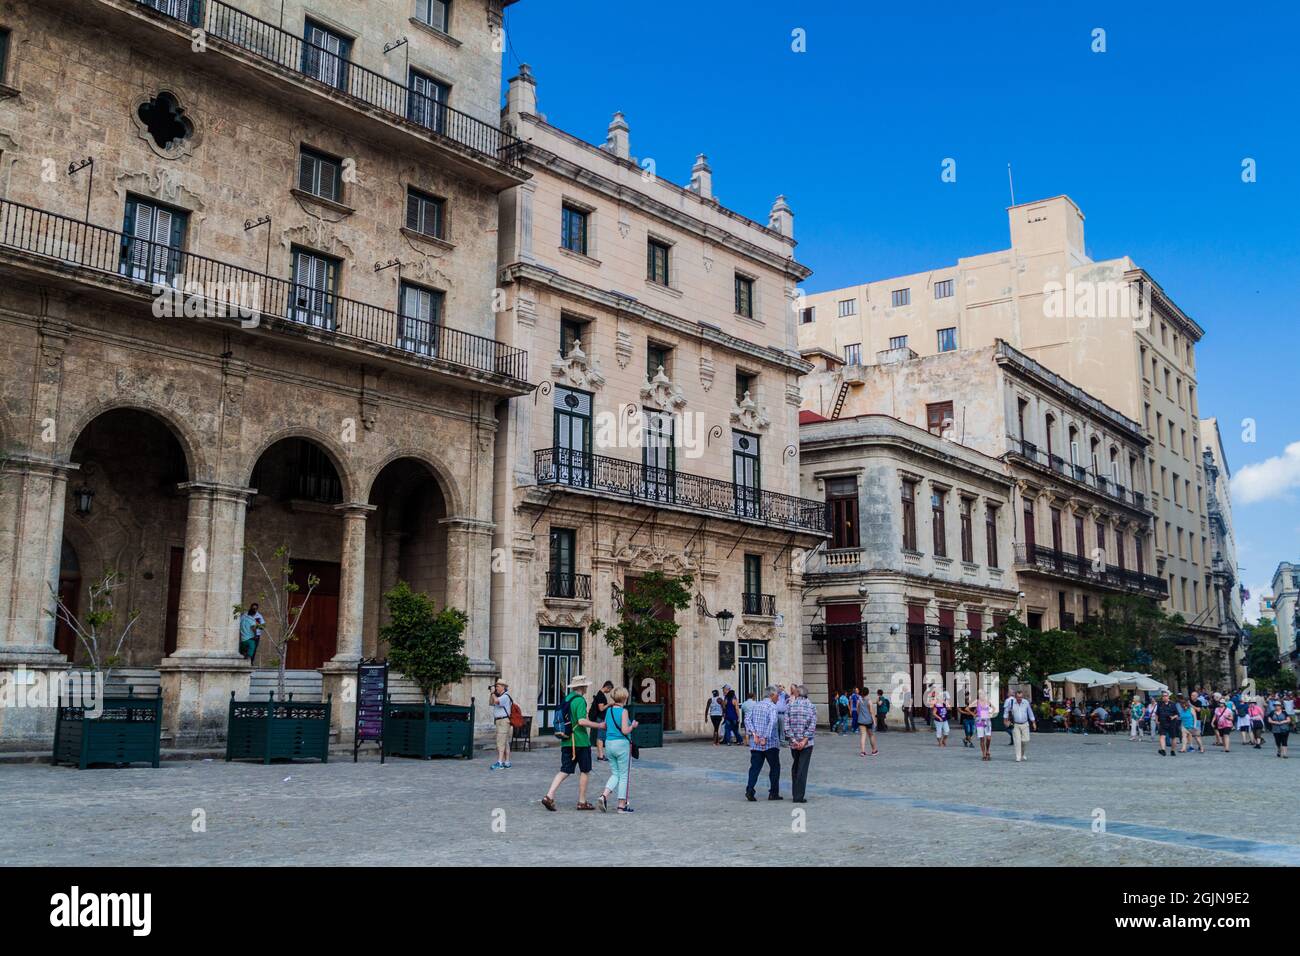 HAVANA, CUBA - FEB 23, 2016: Old colonial buildings on Plaza de San Francisco de Asis square in Habana Vieja. Stock Photo